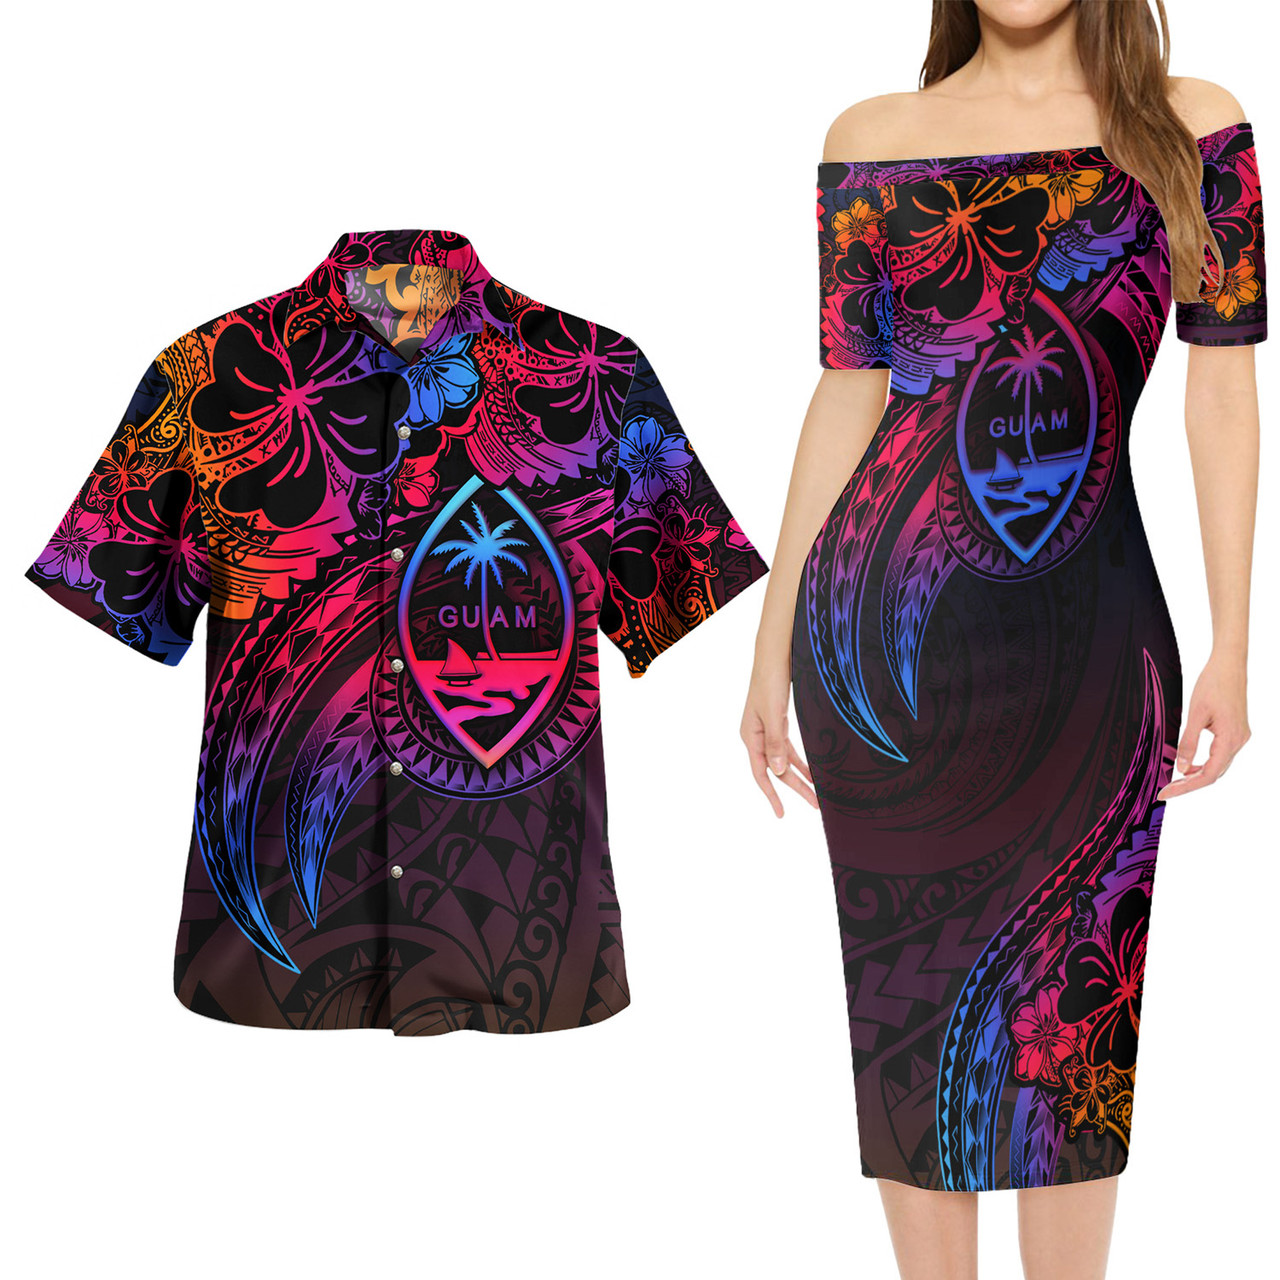 Guam Combo Short Sleeve Dress And Shirt Rainbow Style